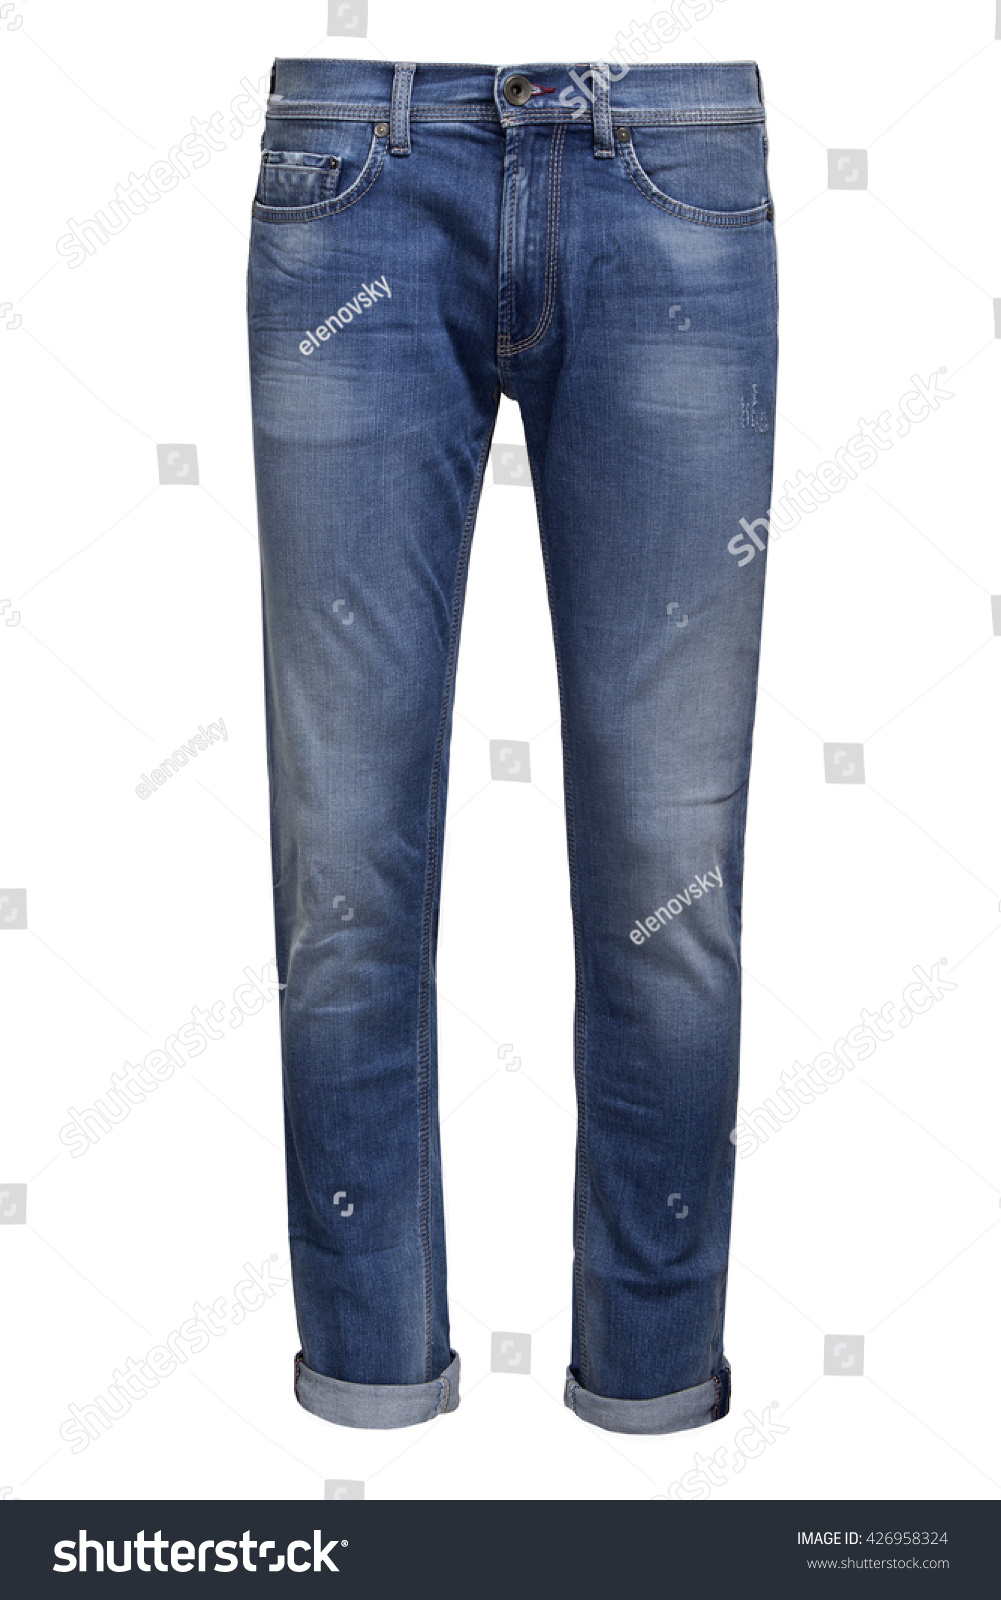 Blue Jeans Trousers Stock Photo 426958324 - Shutterstock